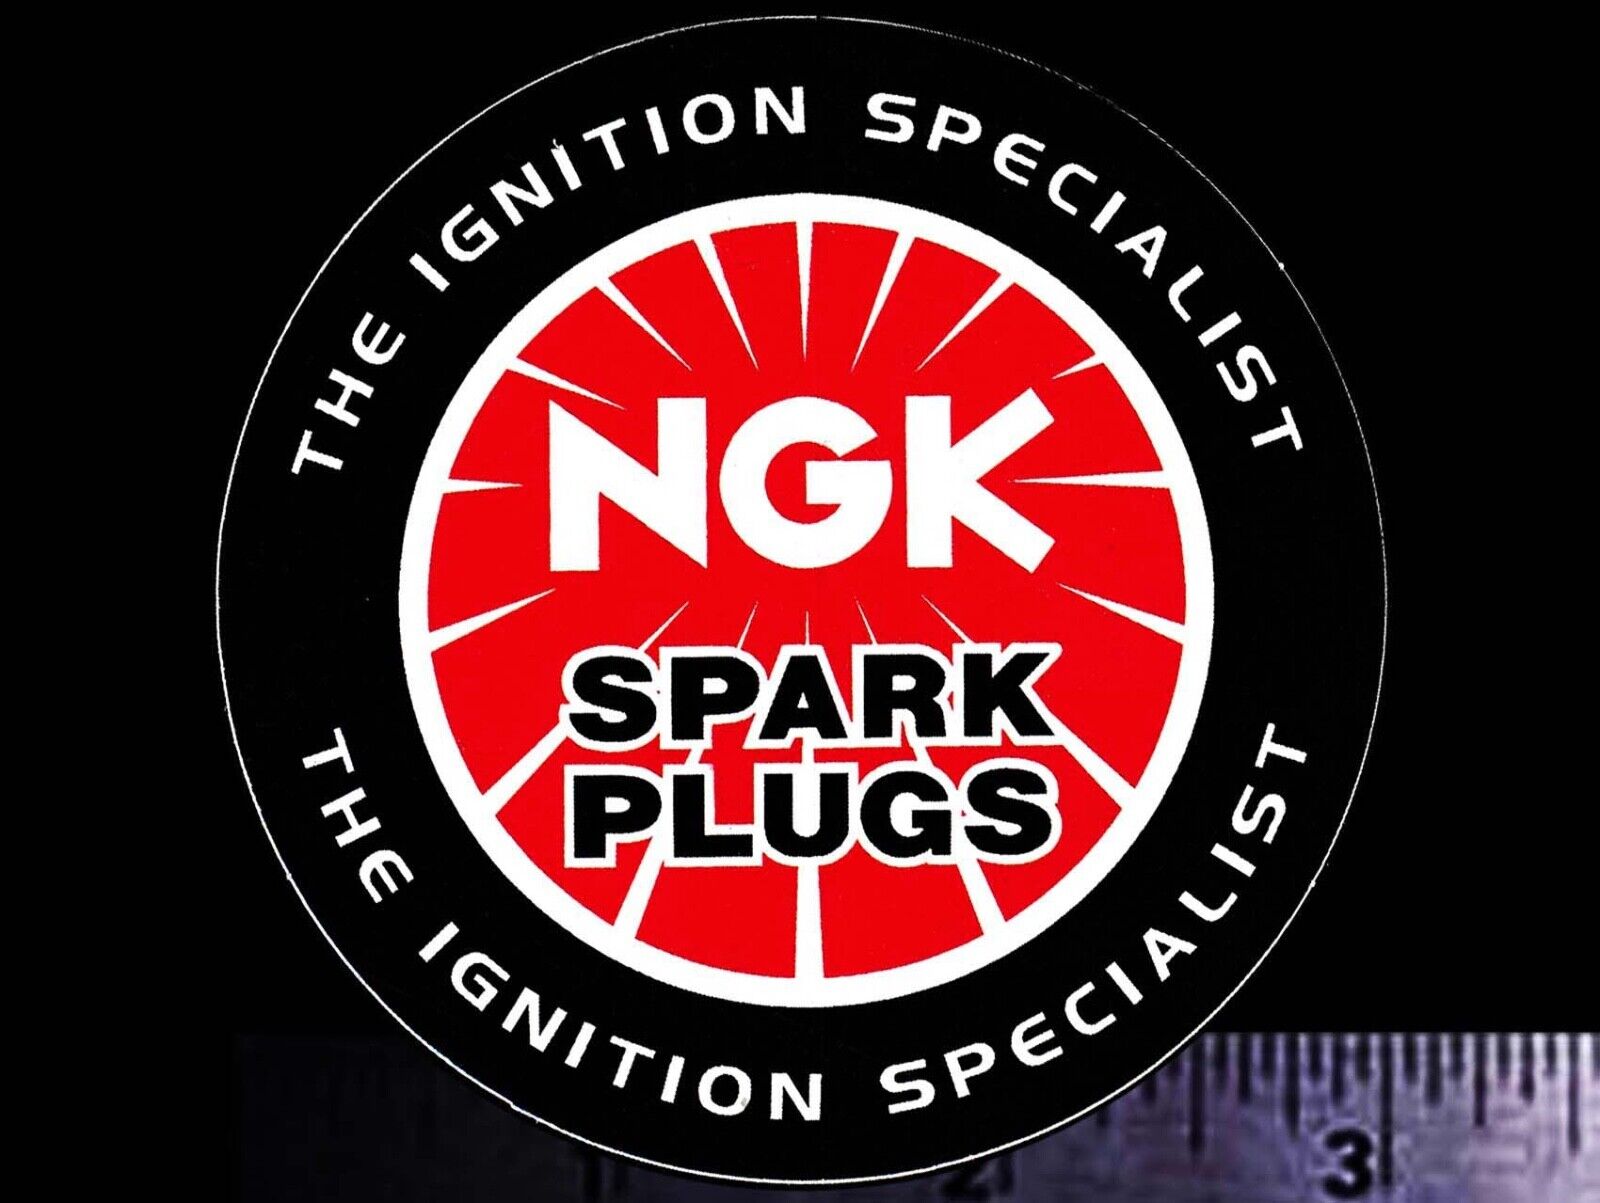 NGK Spark Plugs - Ignition Specialist - Original Vintage Racing Decal/Sticker